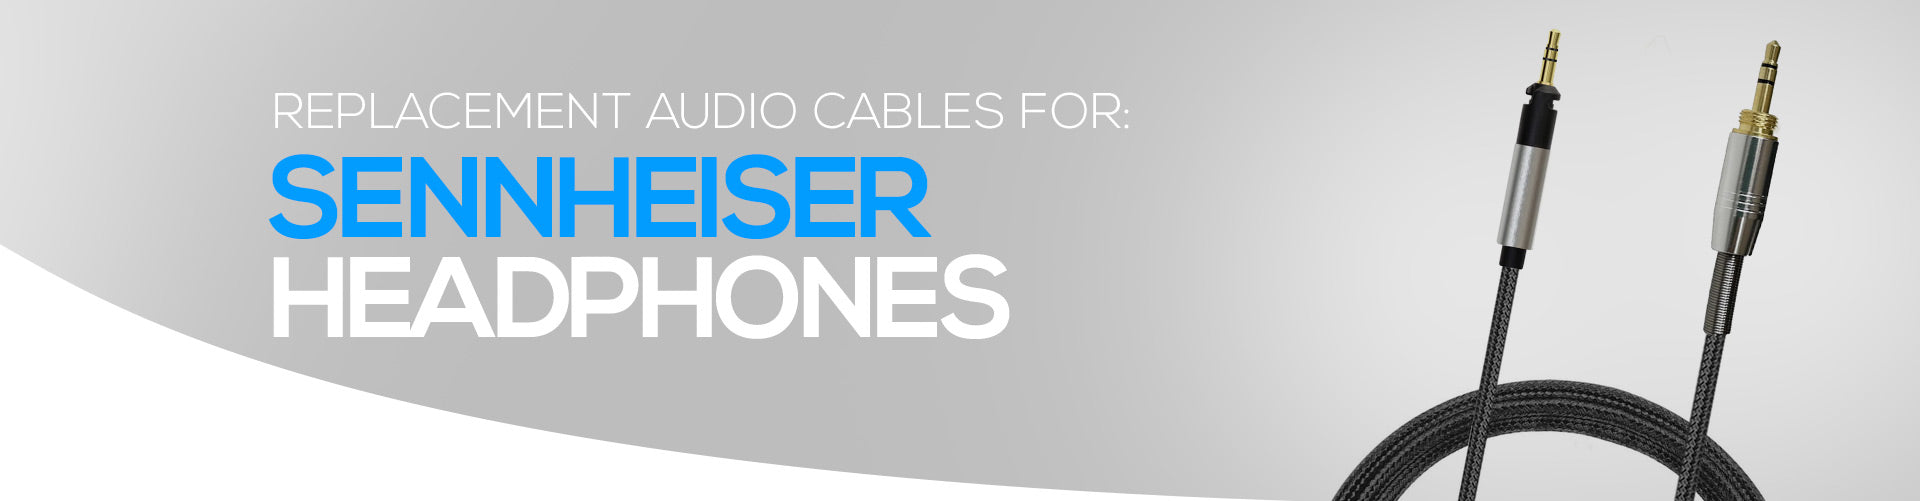 Audio Cables For Sennheiser Headphones